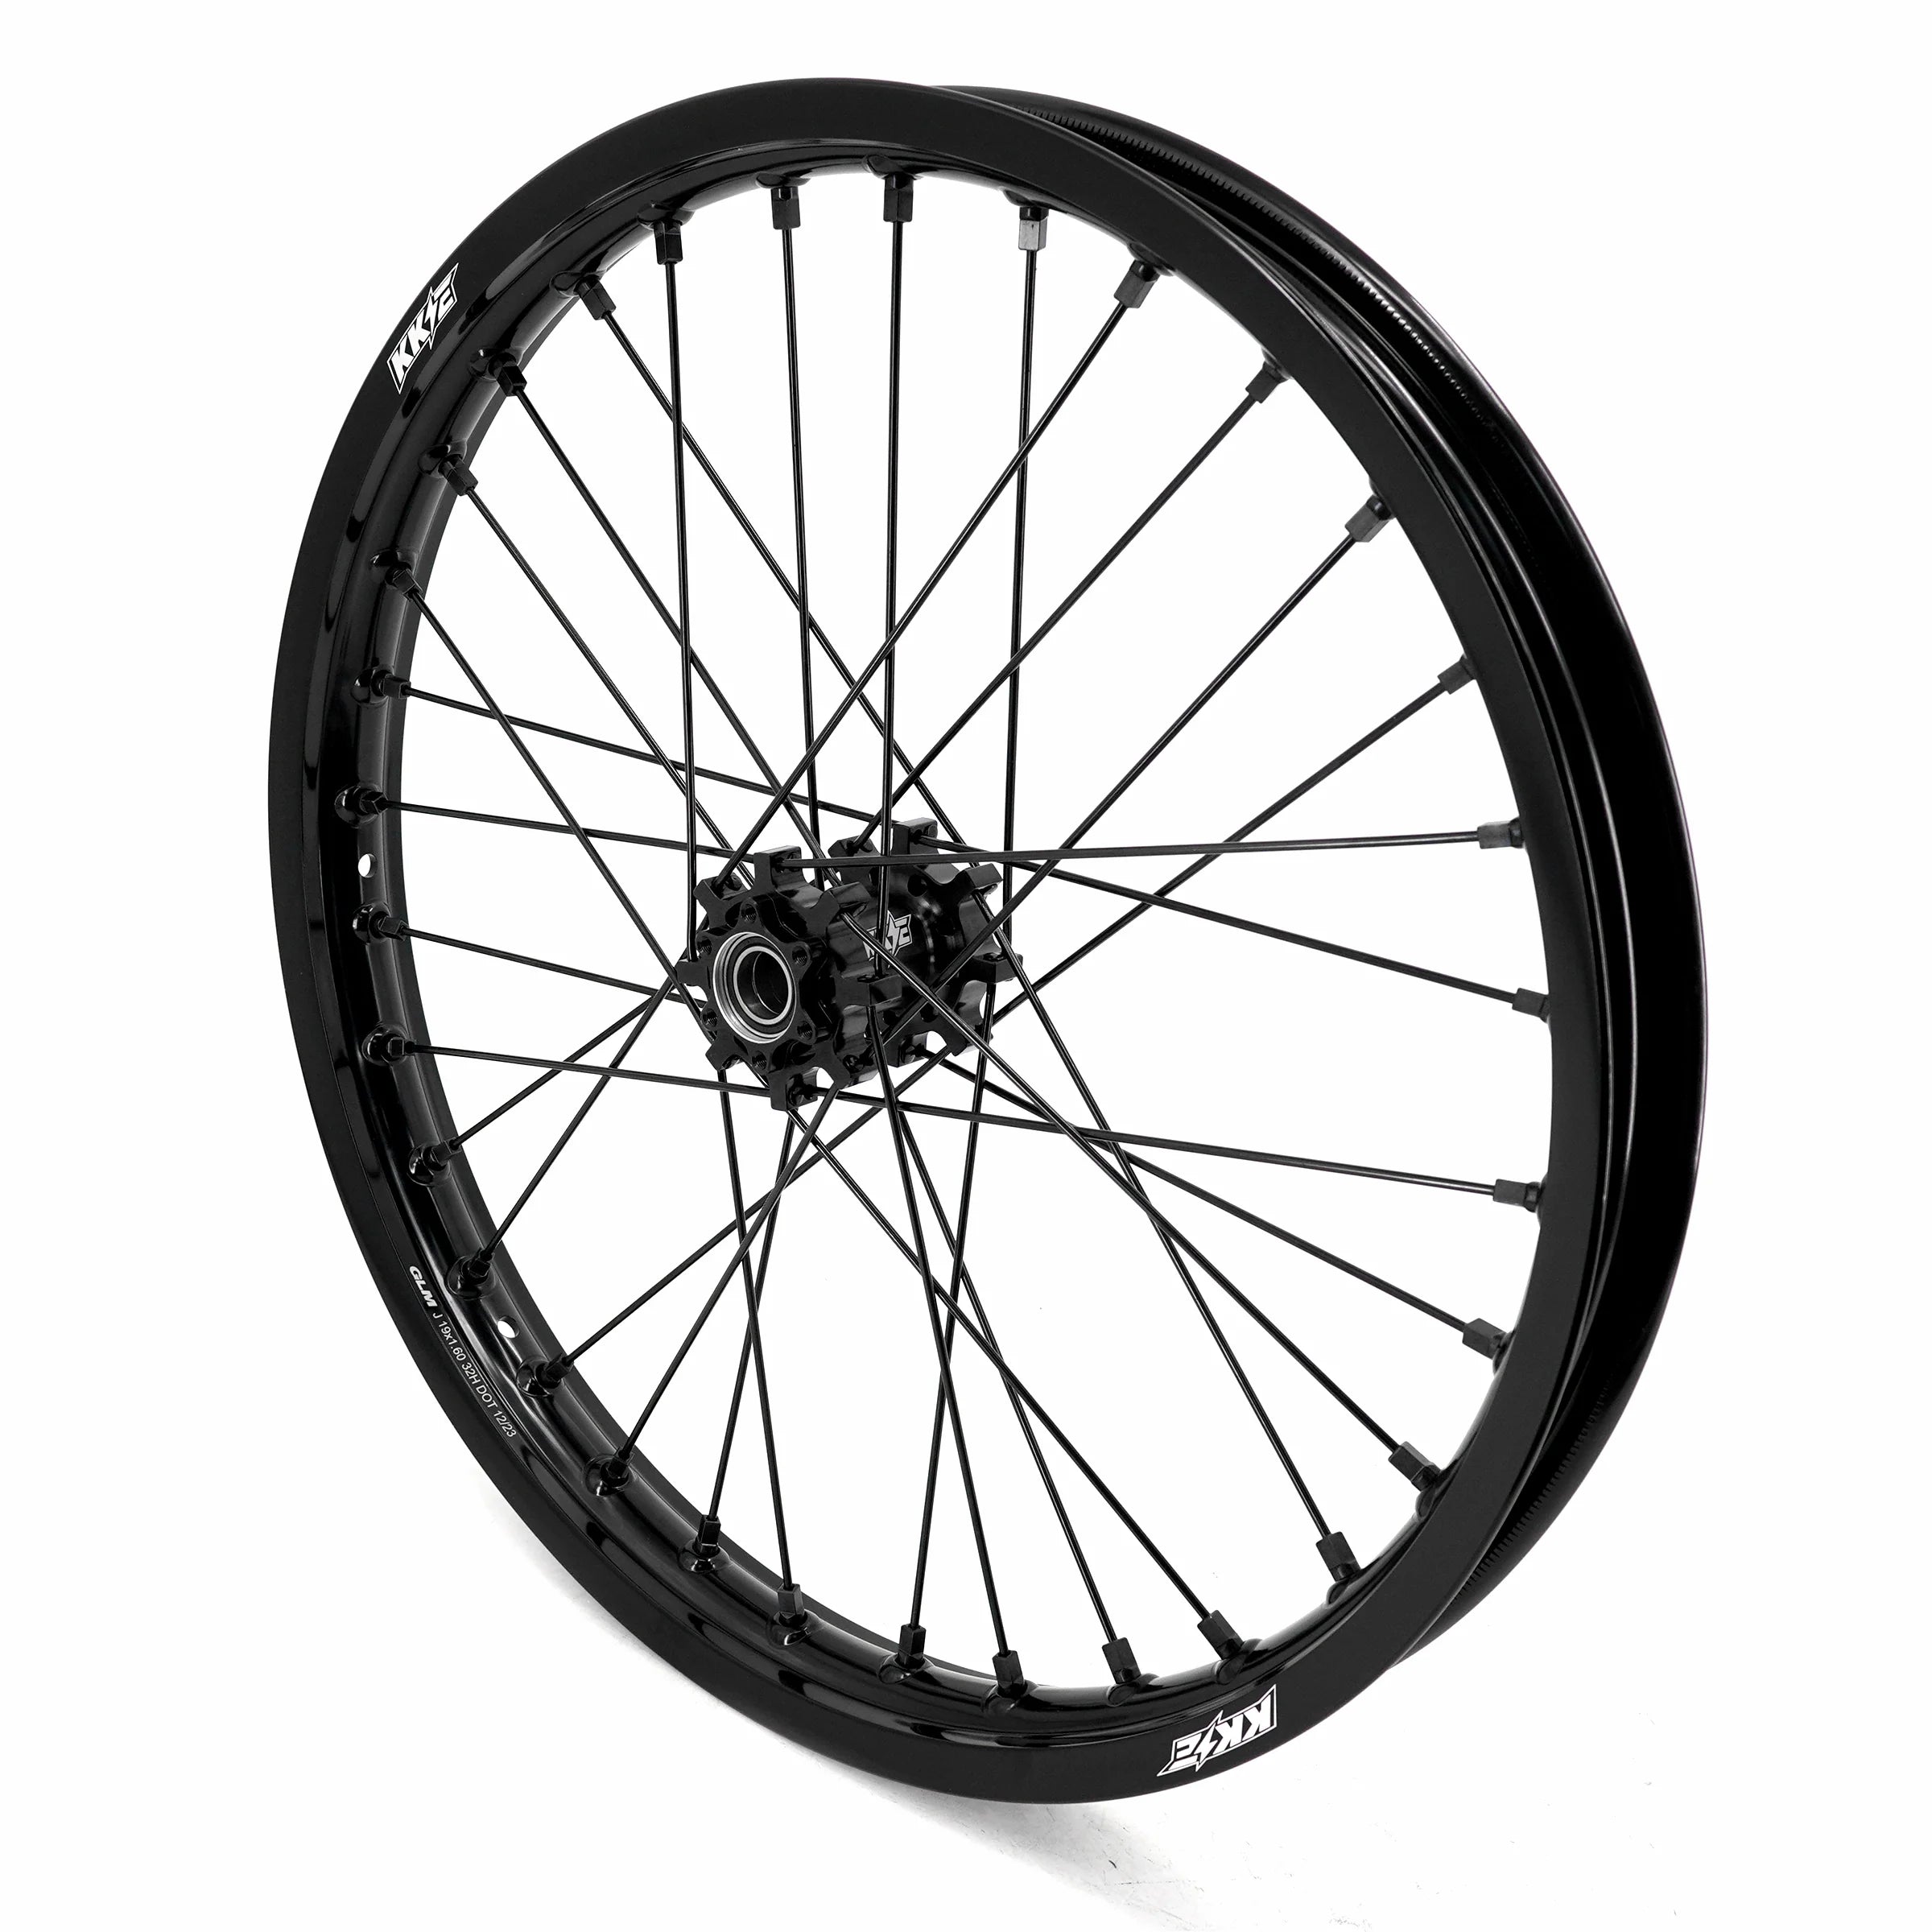 KKE 19"/16" Complete Wheel Set for Talaria MX3/MX4